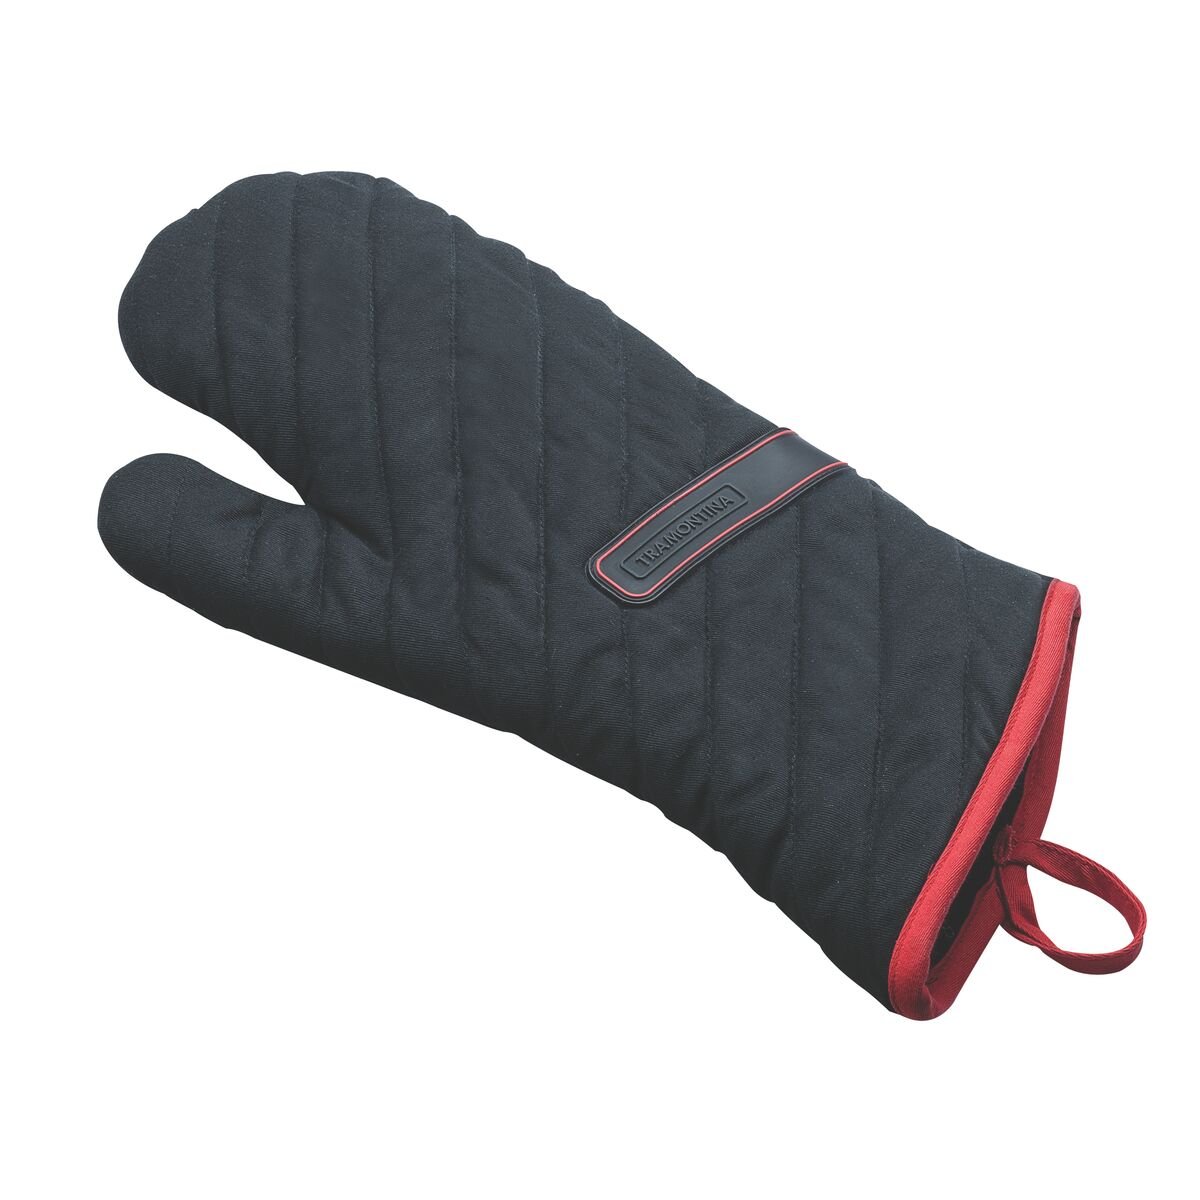 Tramontina Churrasco heat-resistant mitt